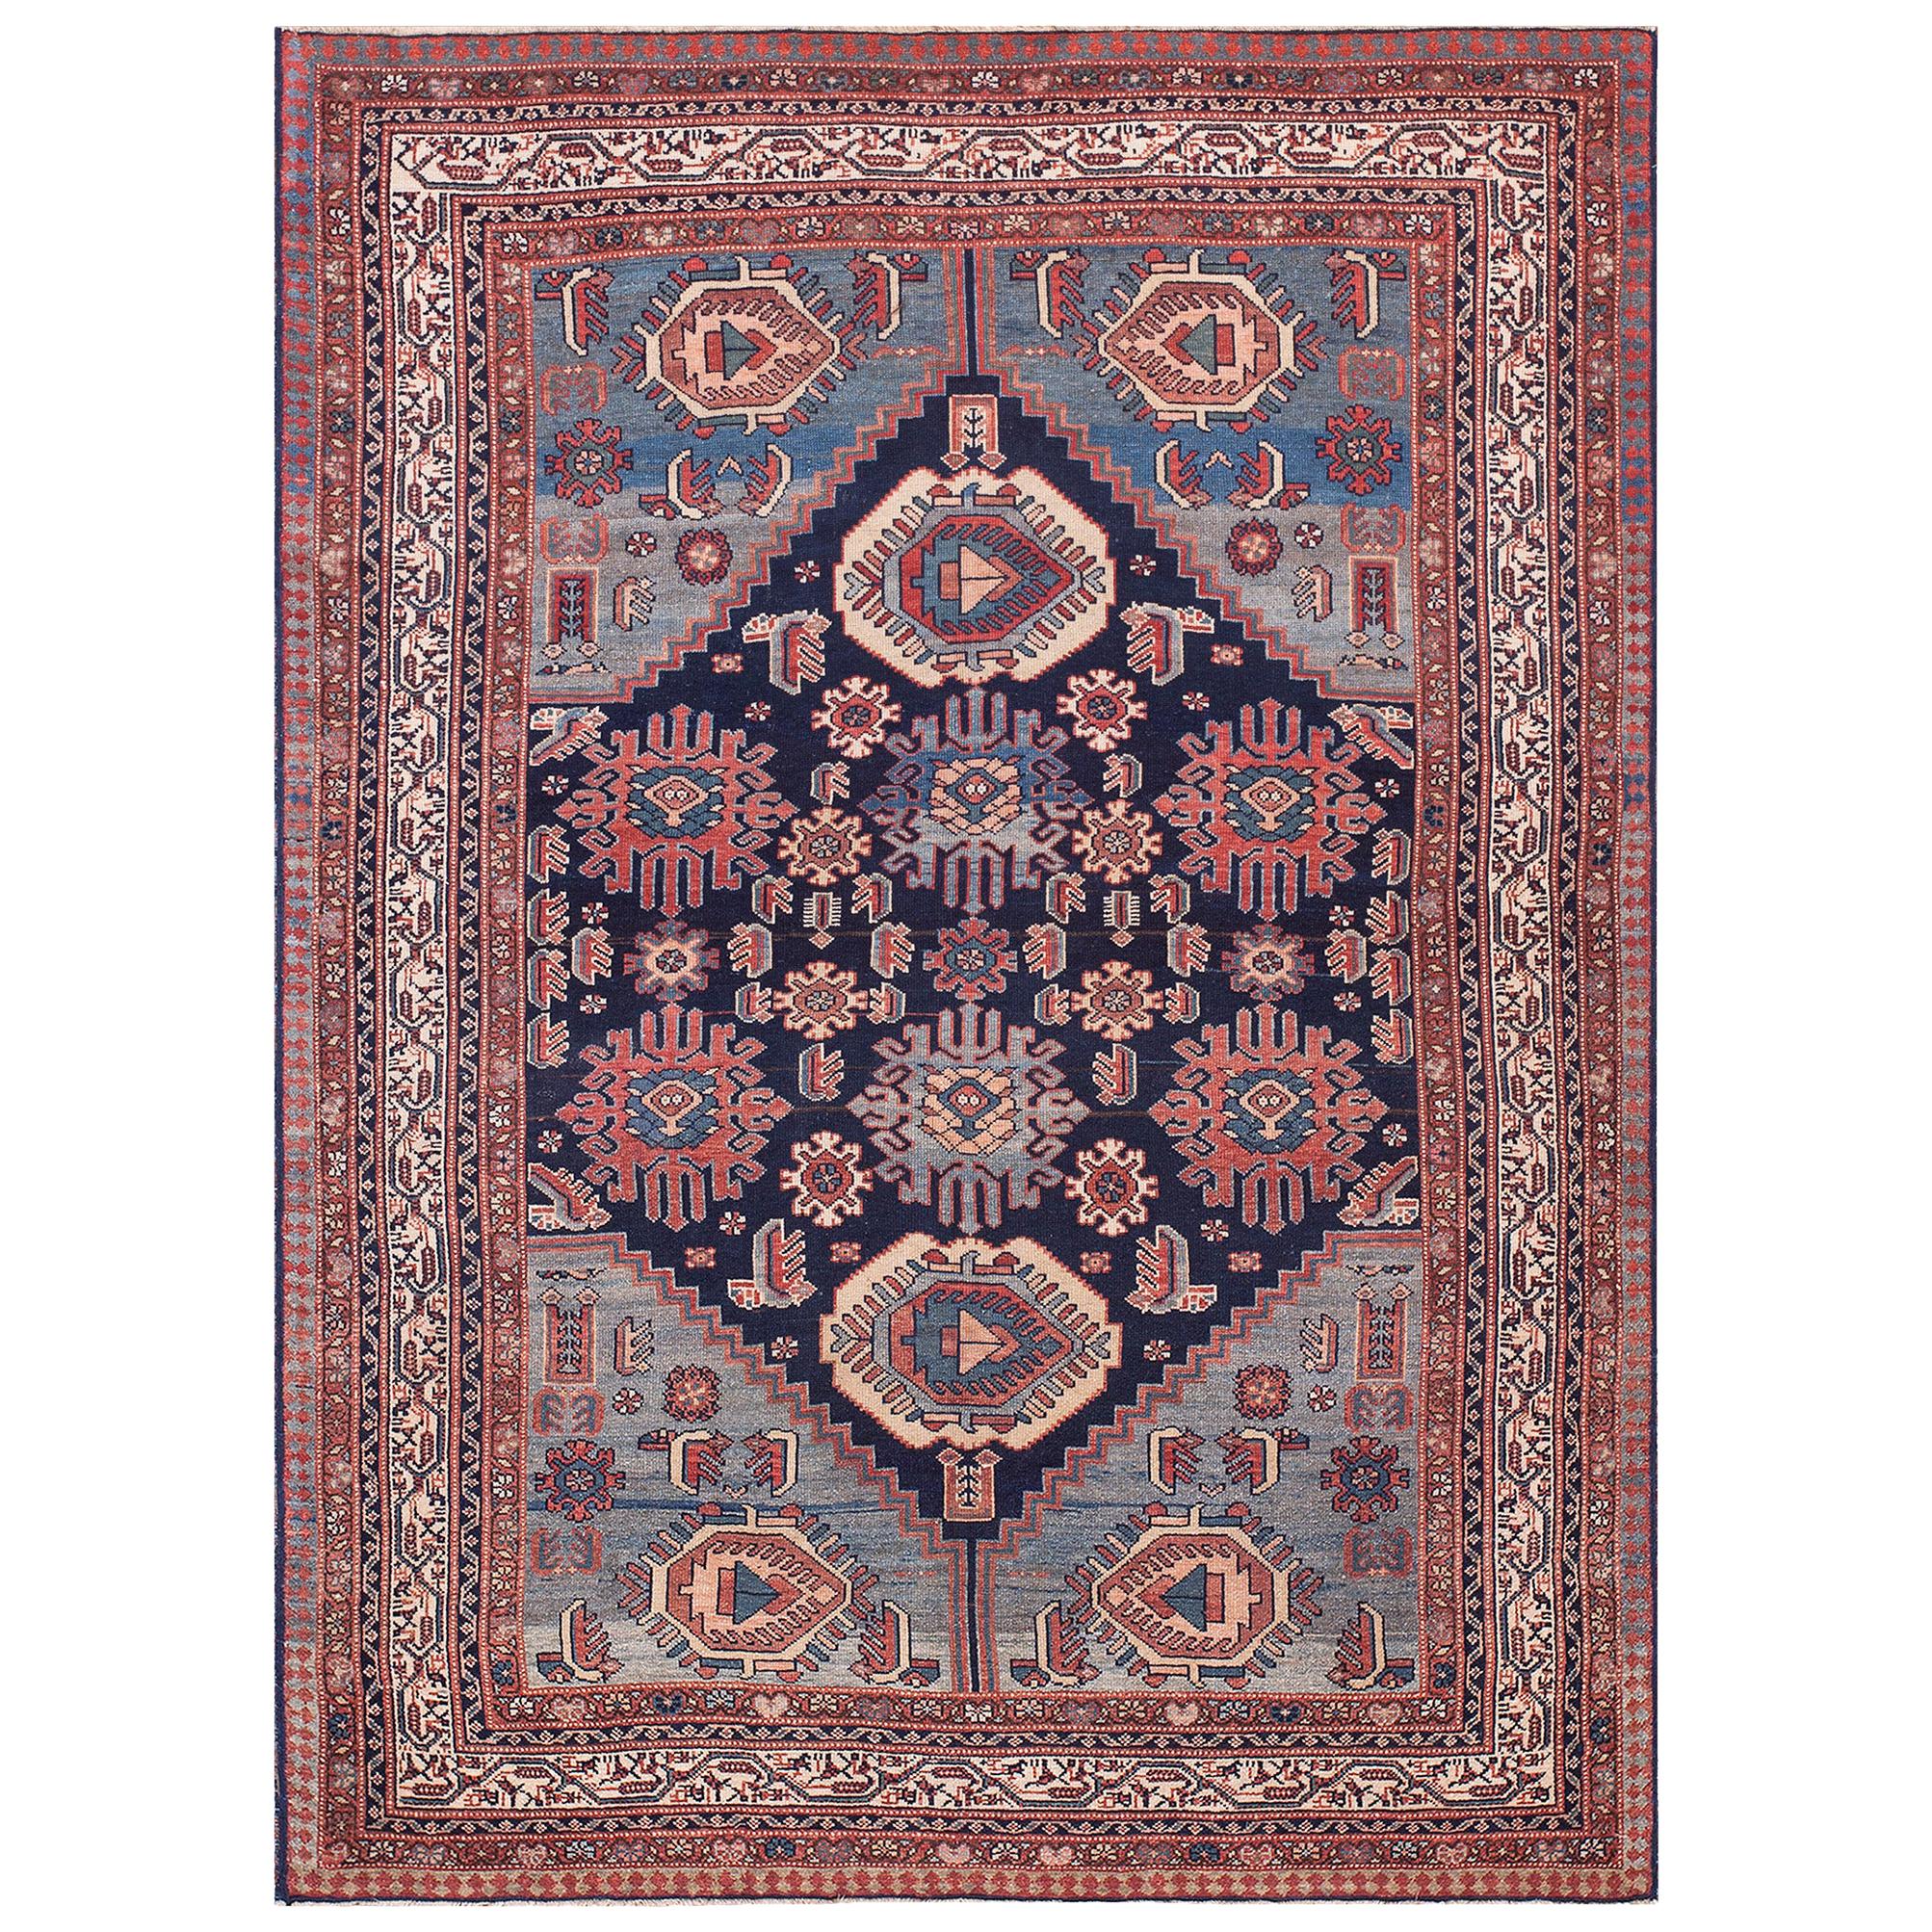 19th Century Persian Malayer Carpet ( 4'10" x 6'2" - 148 x 188 ) For Sale